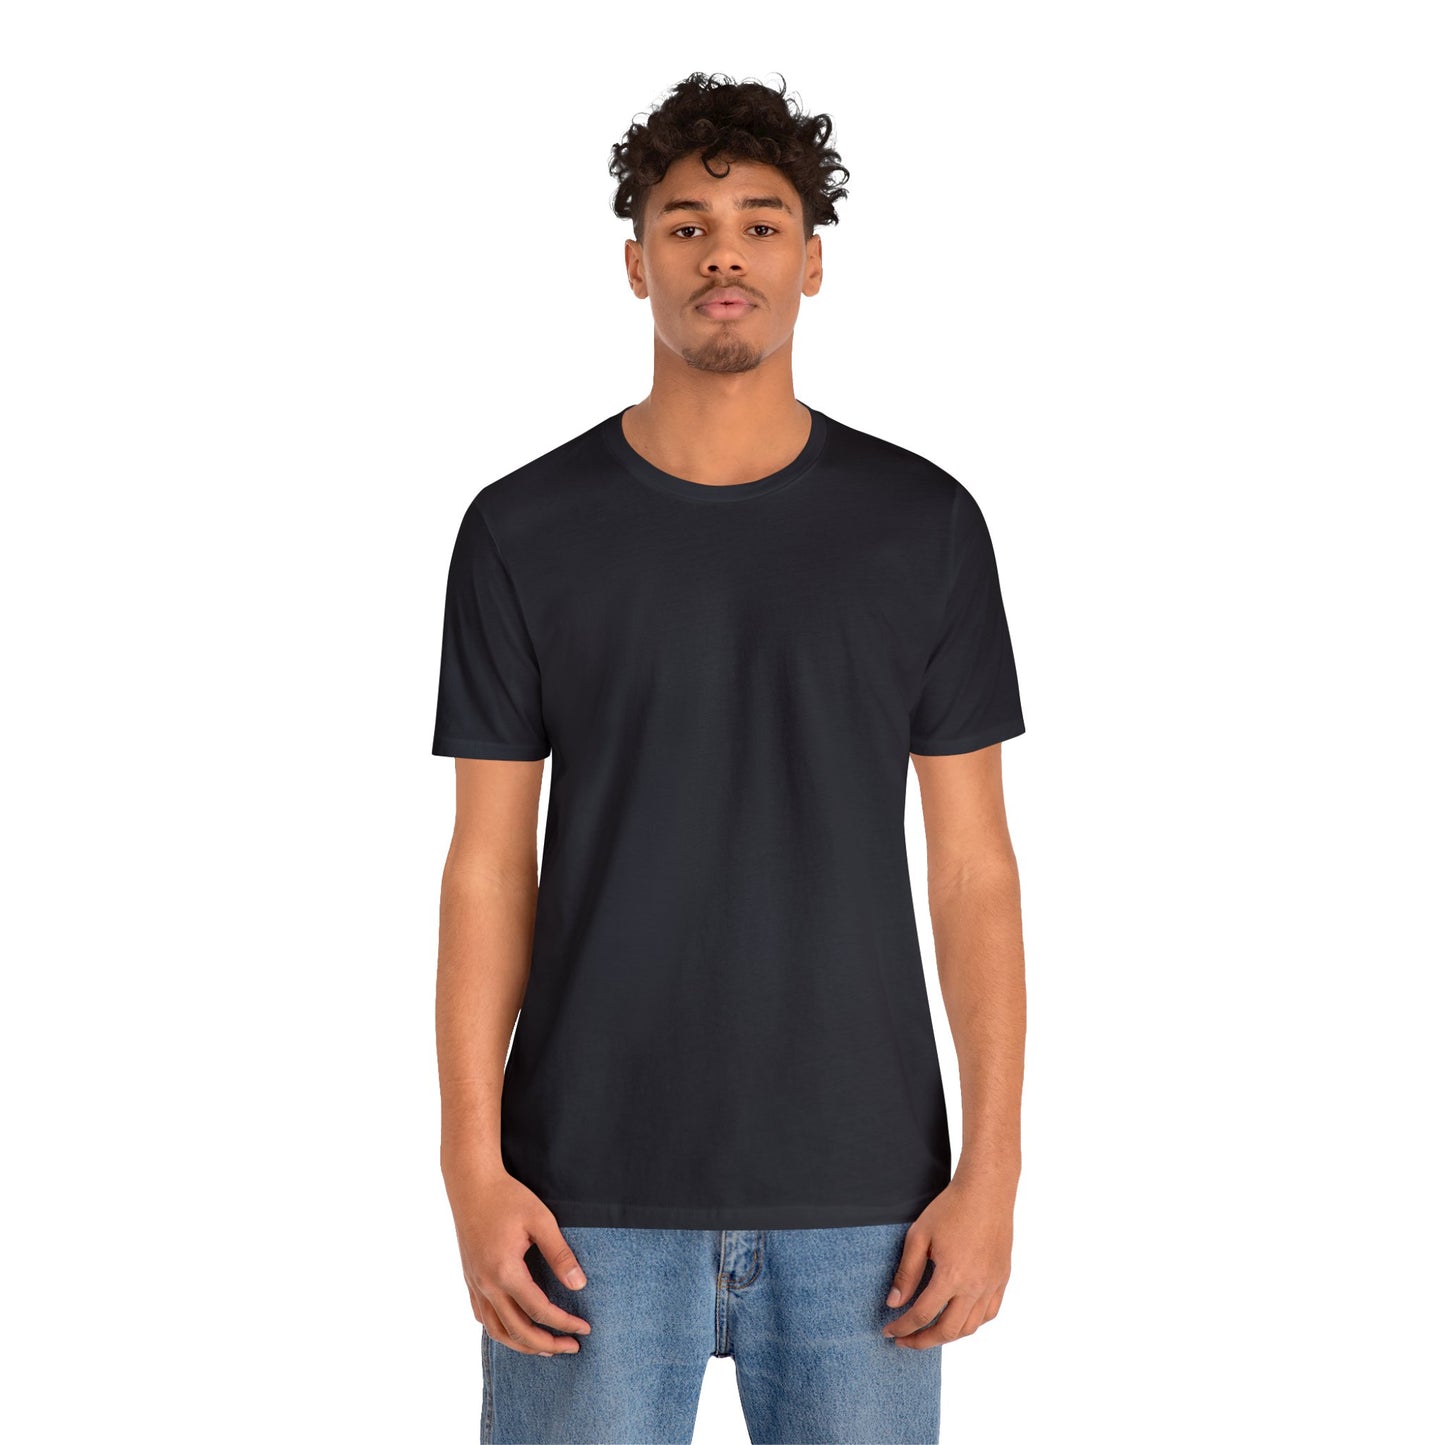 Unisex Jersey Short Sleeve Dark Grey T Shirt